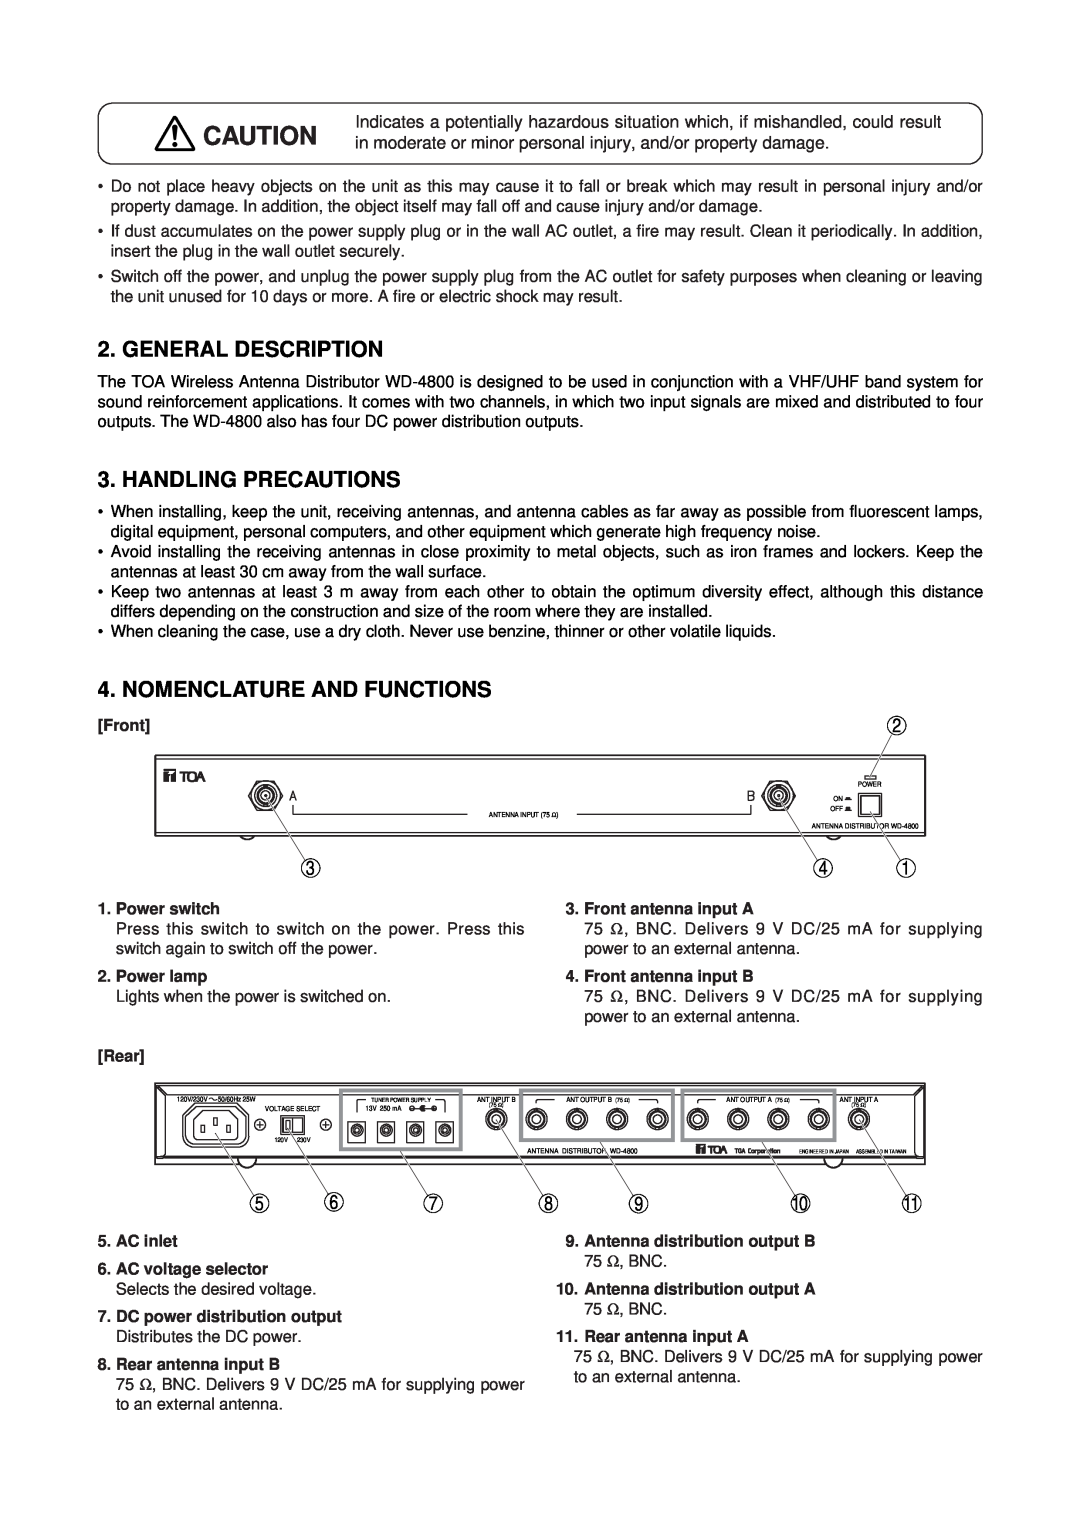 TOA Electronics WD-4800 instruction manual General Description, Handling Precautions, Nomenclature And Functions 